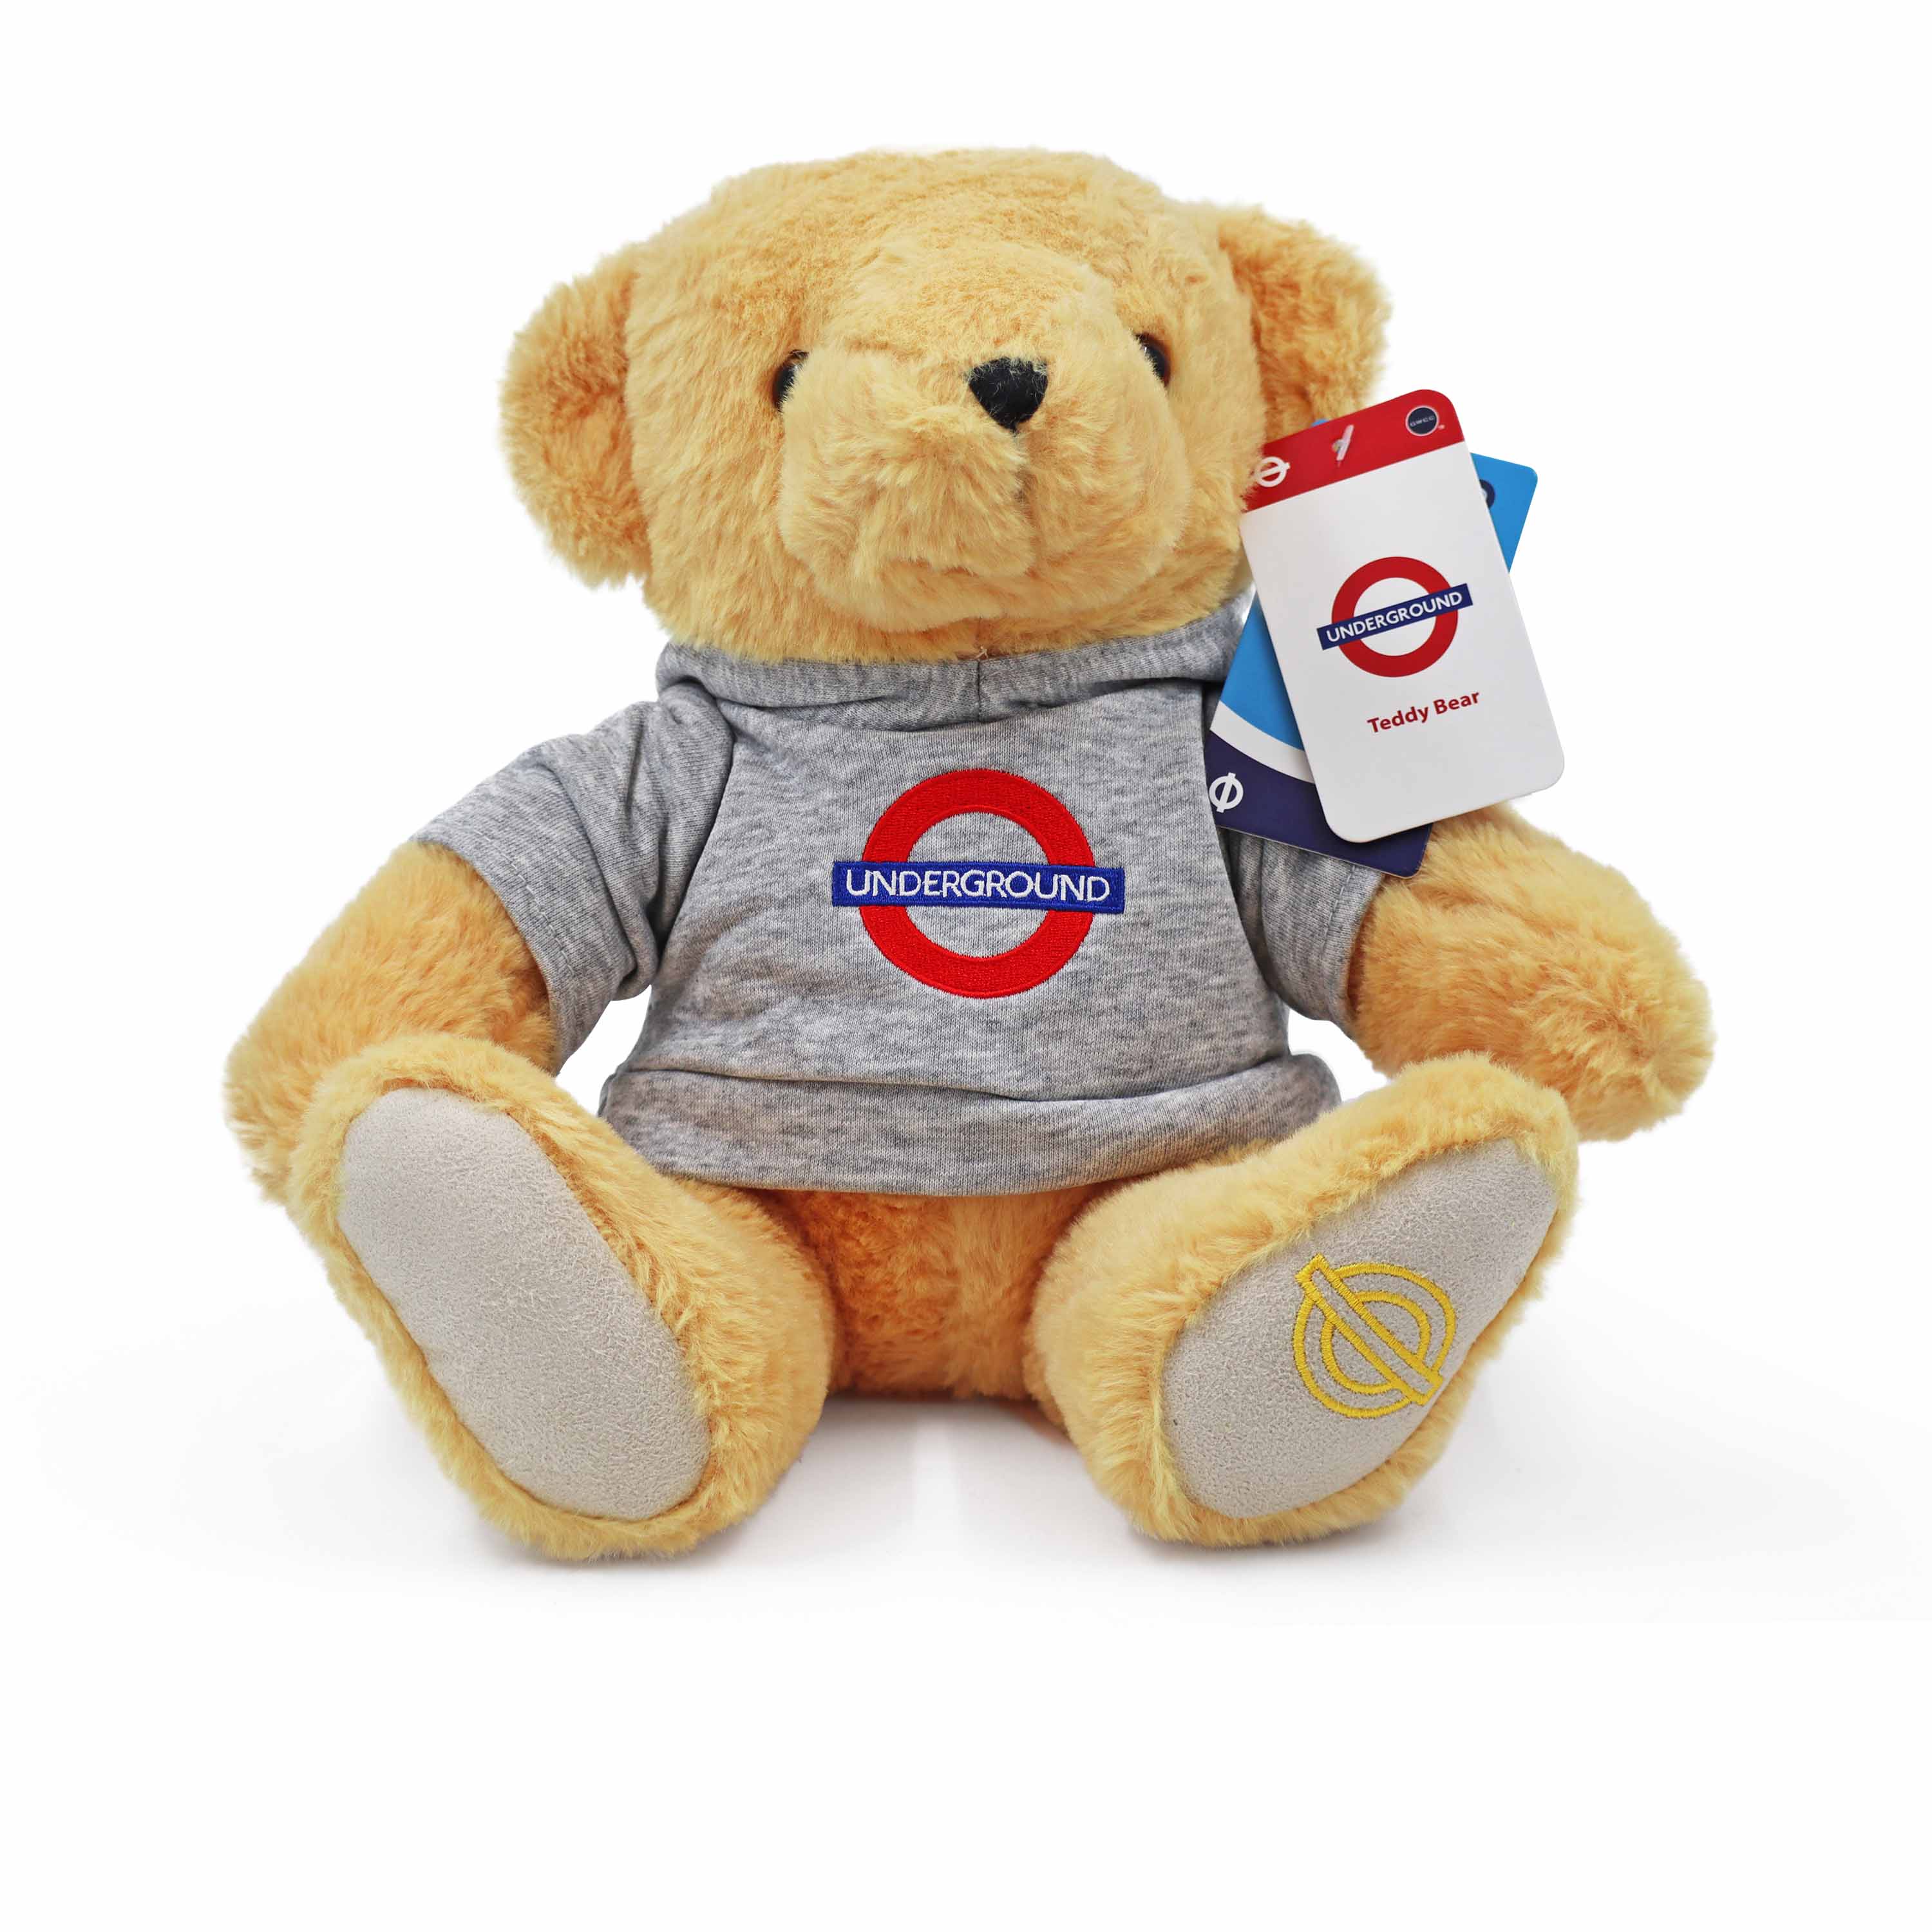 Paddington Bear London - Like Love London